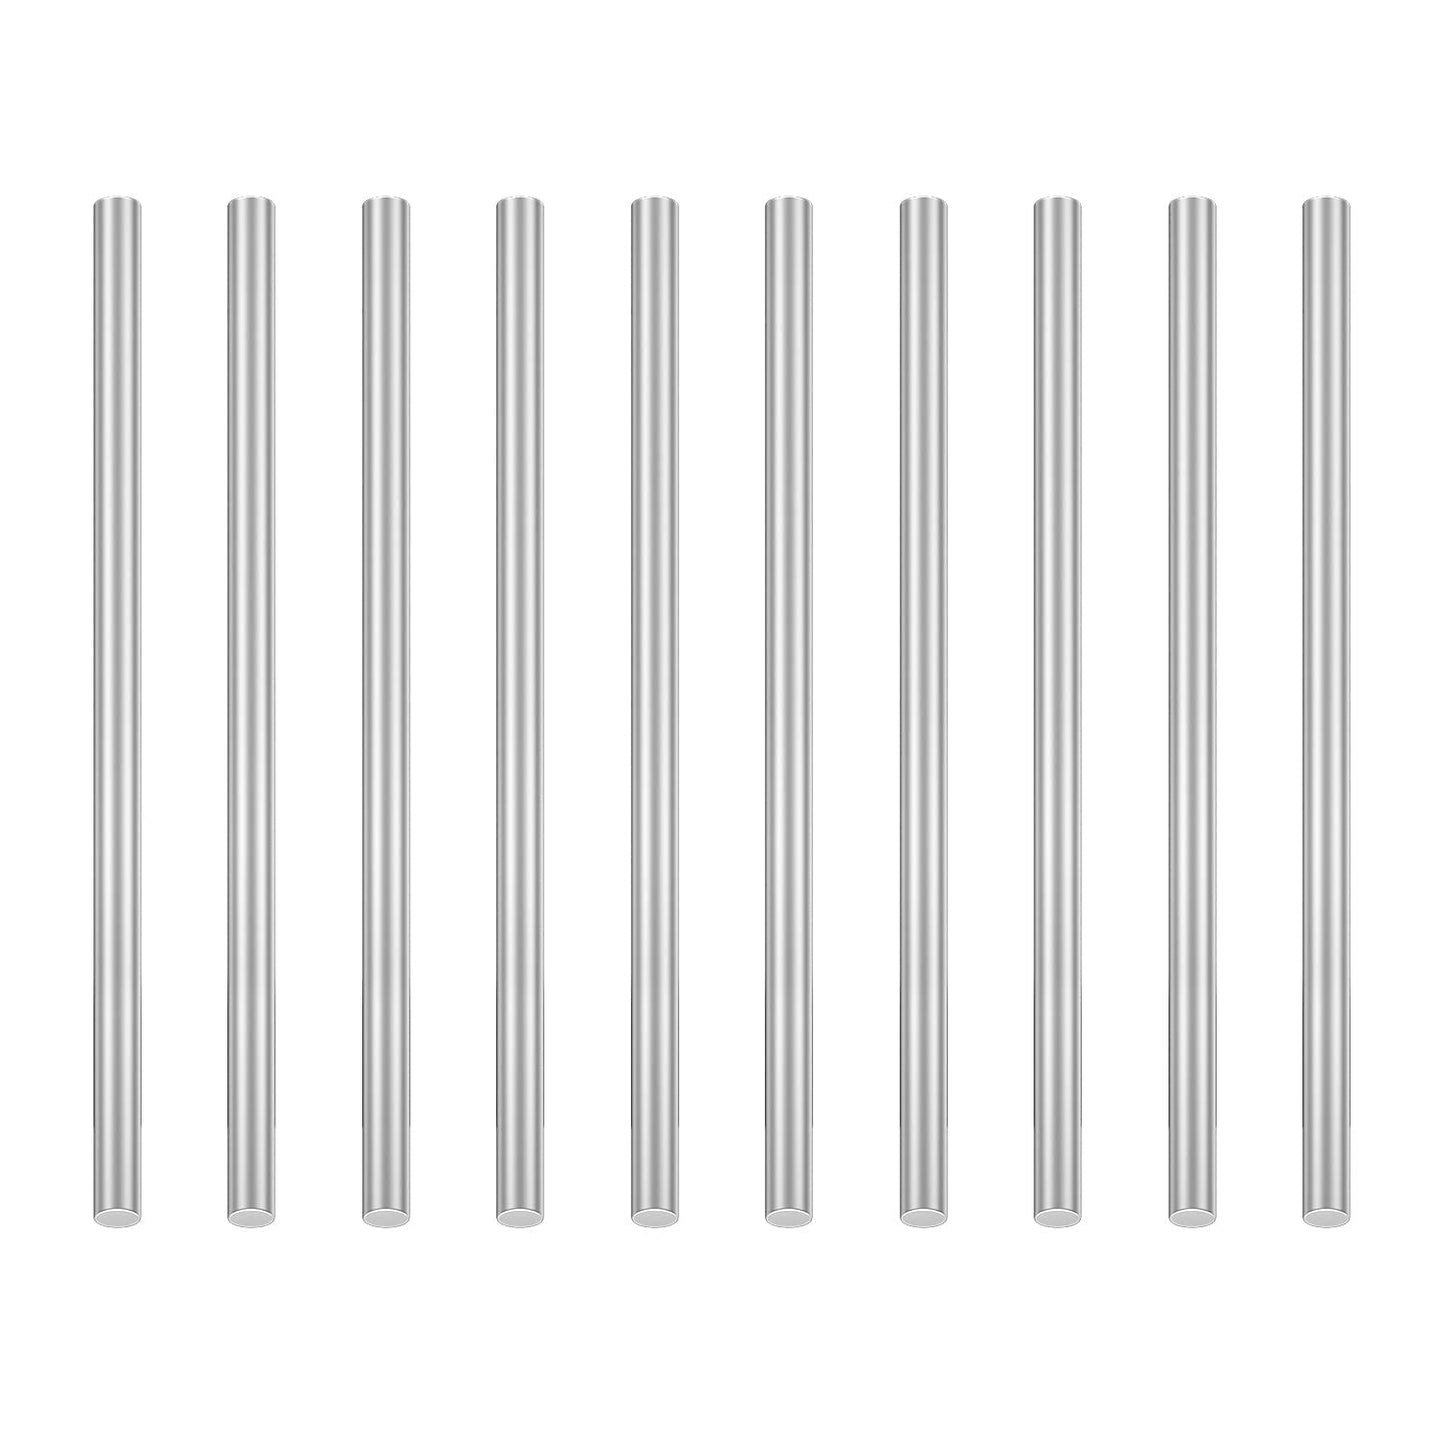 Aluminum round Rods Assortment Kit, Lathe Bar Stock, Diameter 1.0-8.0Mm, Length 100Mm for DIY Craft Making (27 Pieces)